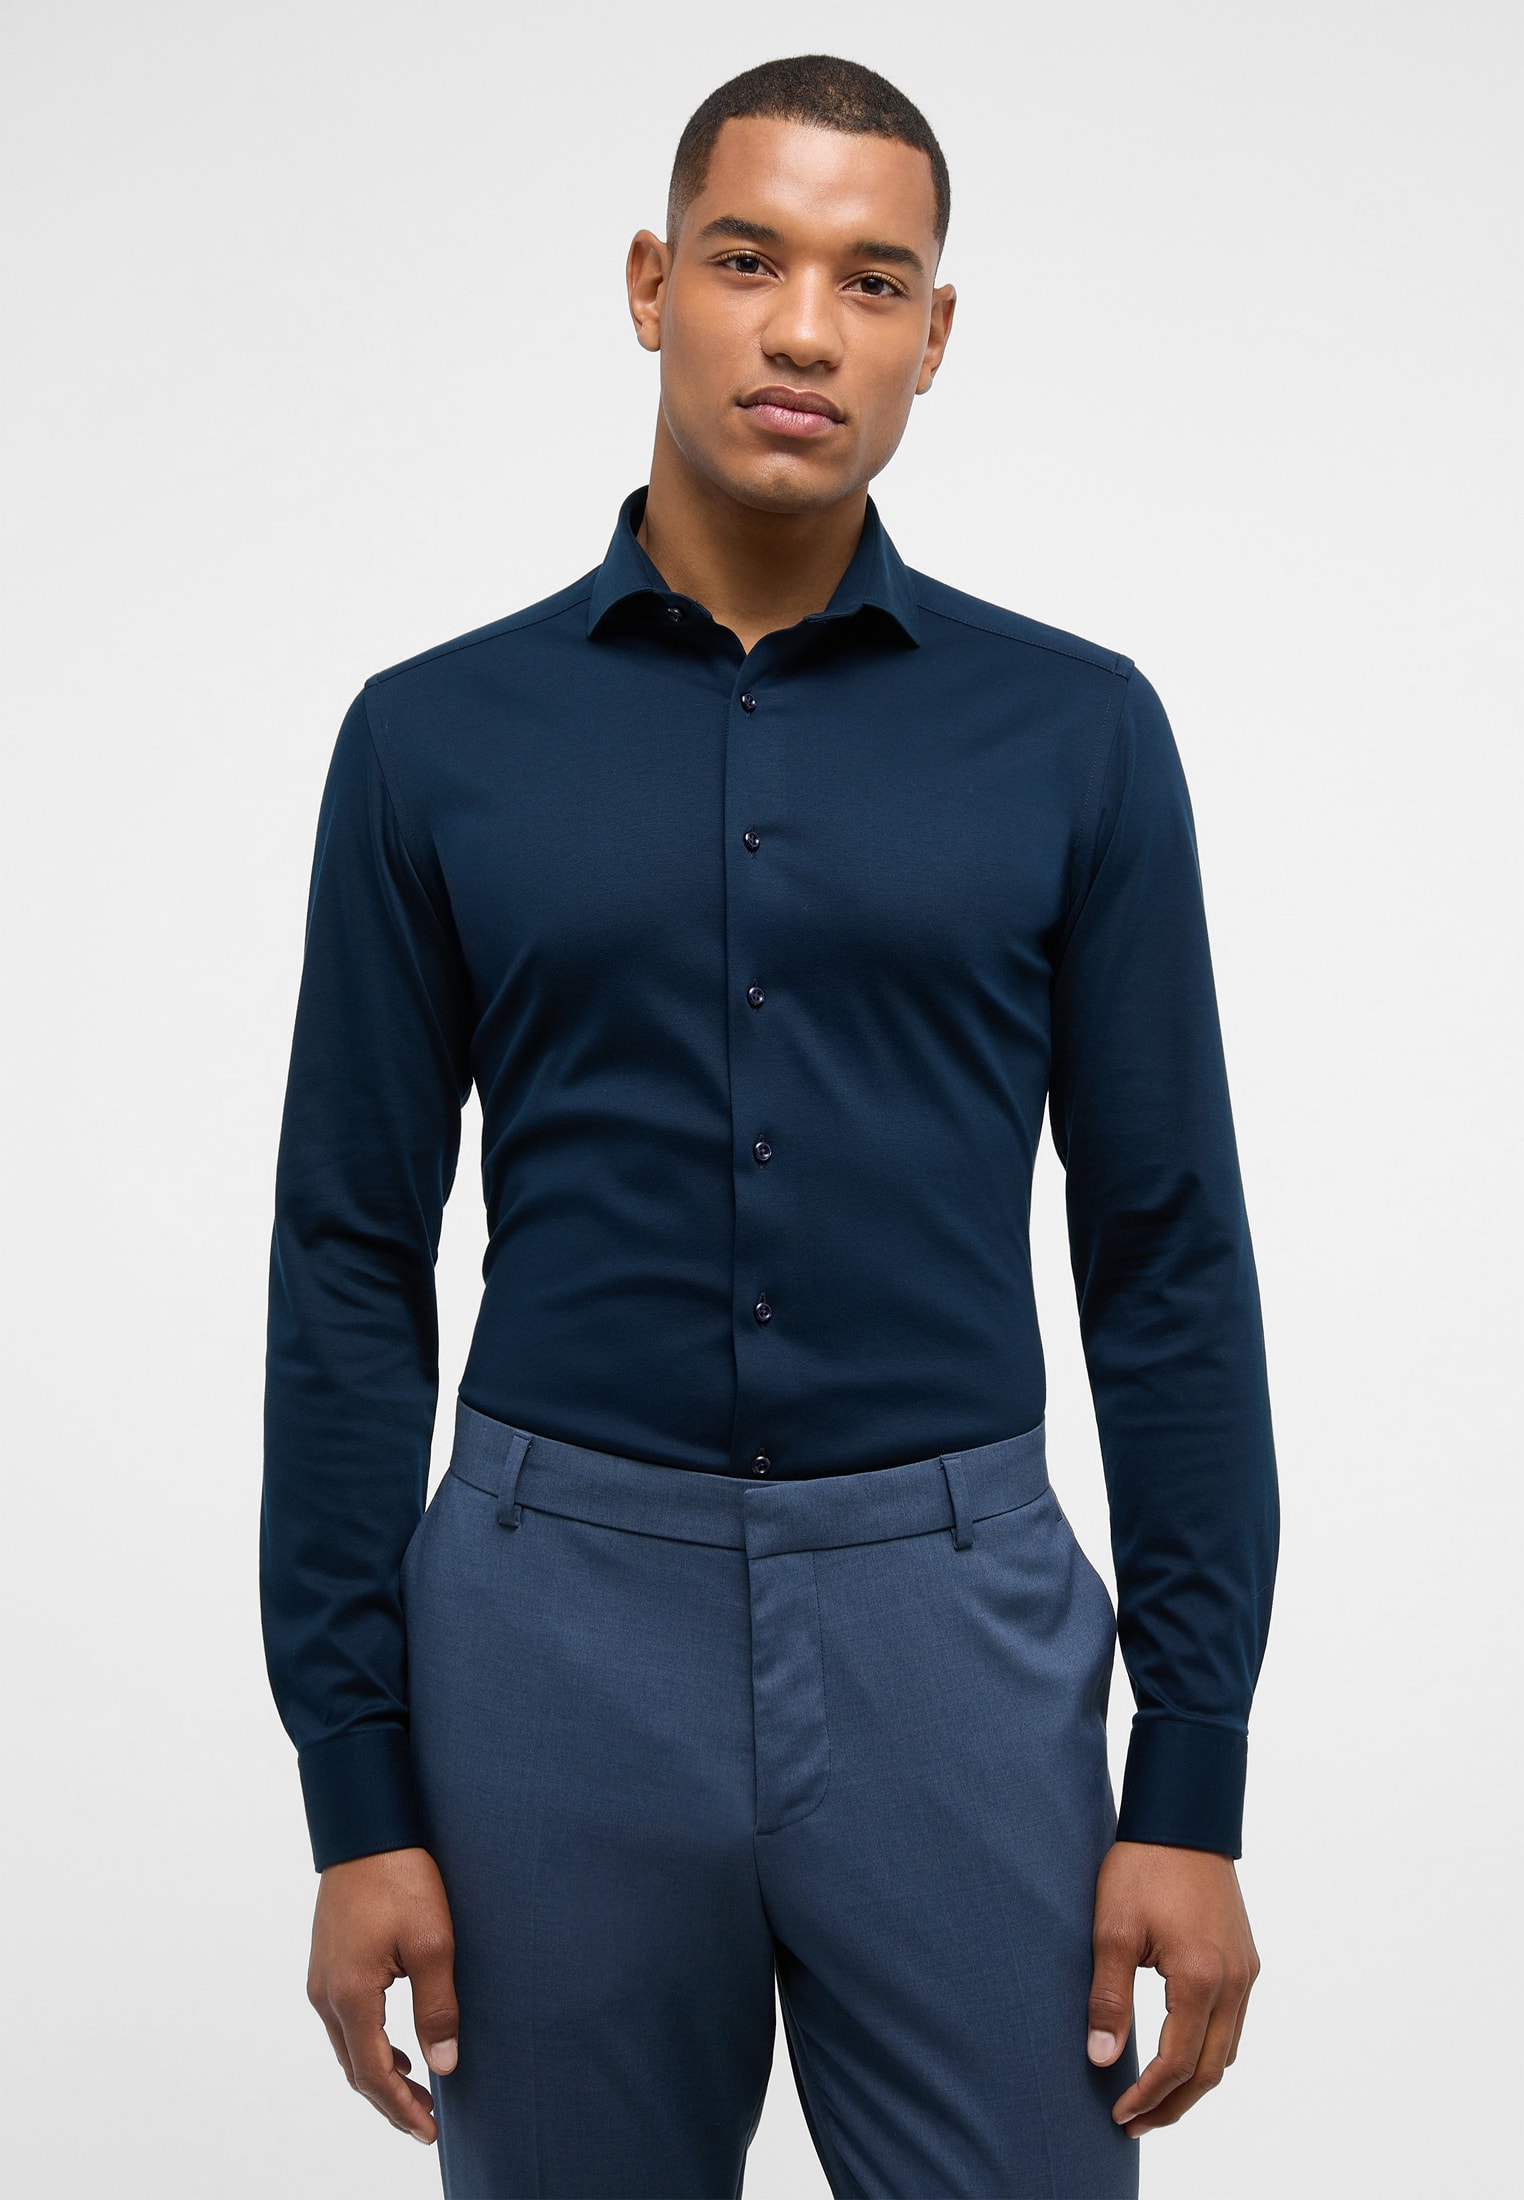 SLIM FIT Jersey Shirt in 1SH00378-01-81-40-1/1 dunkelblau 40 | | unifarben dunkelblau | Langarm 